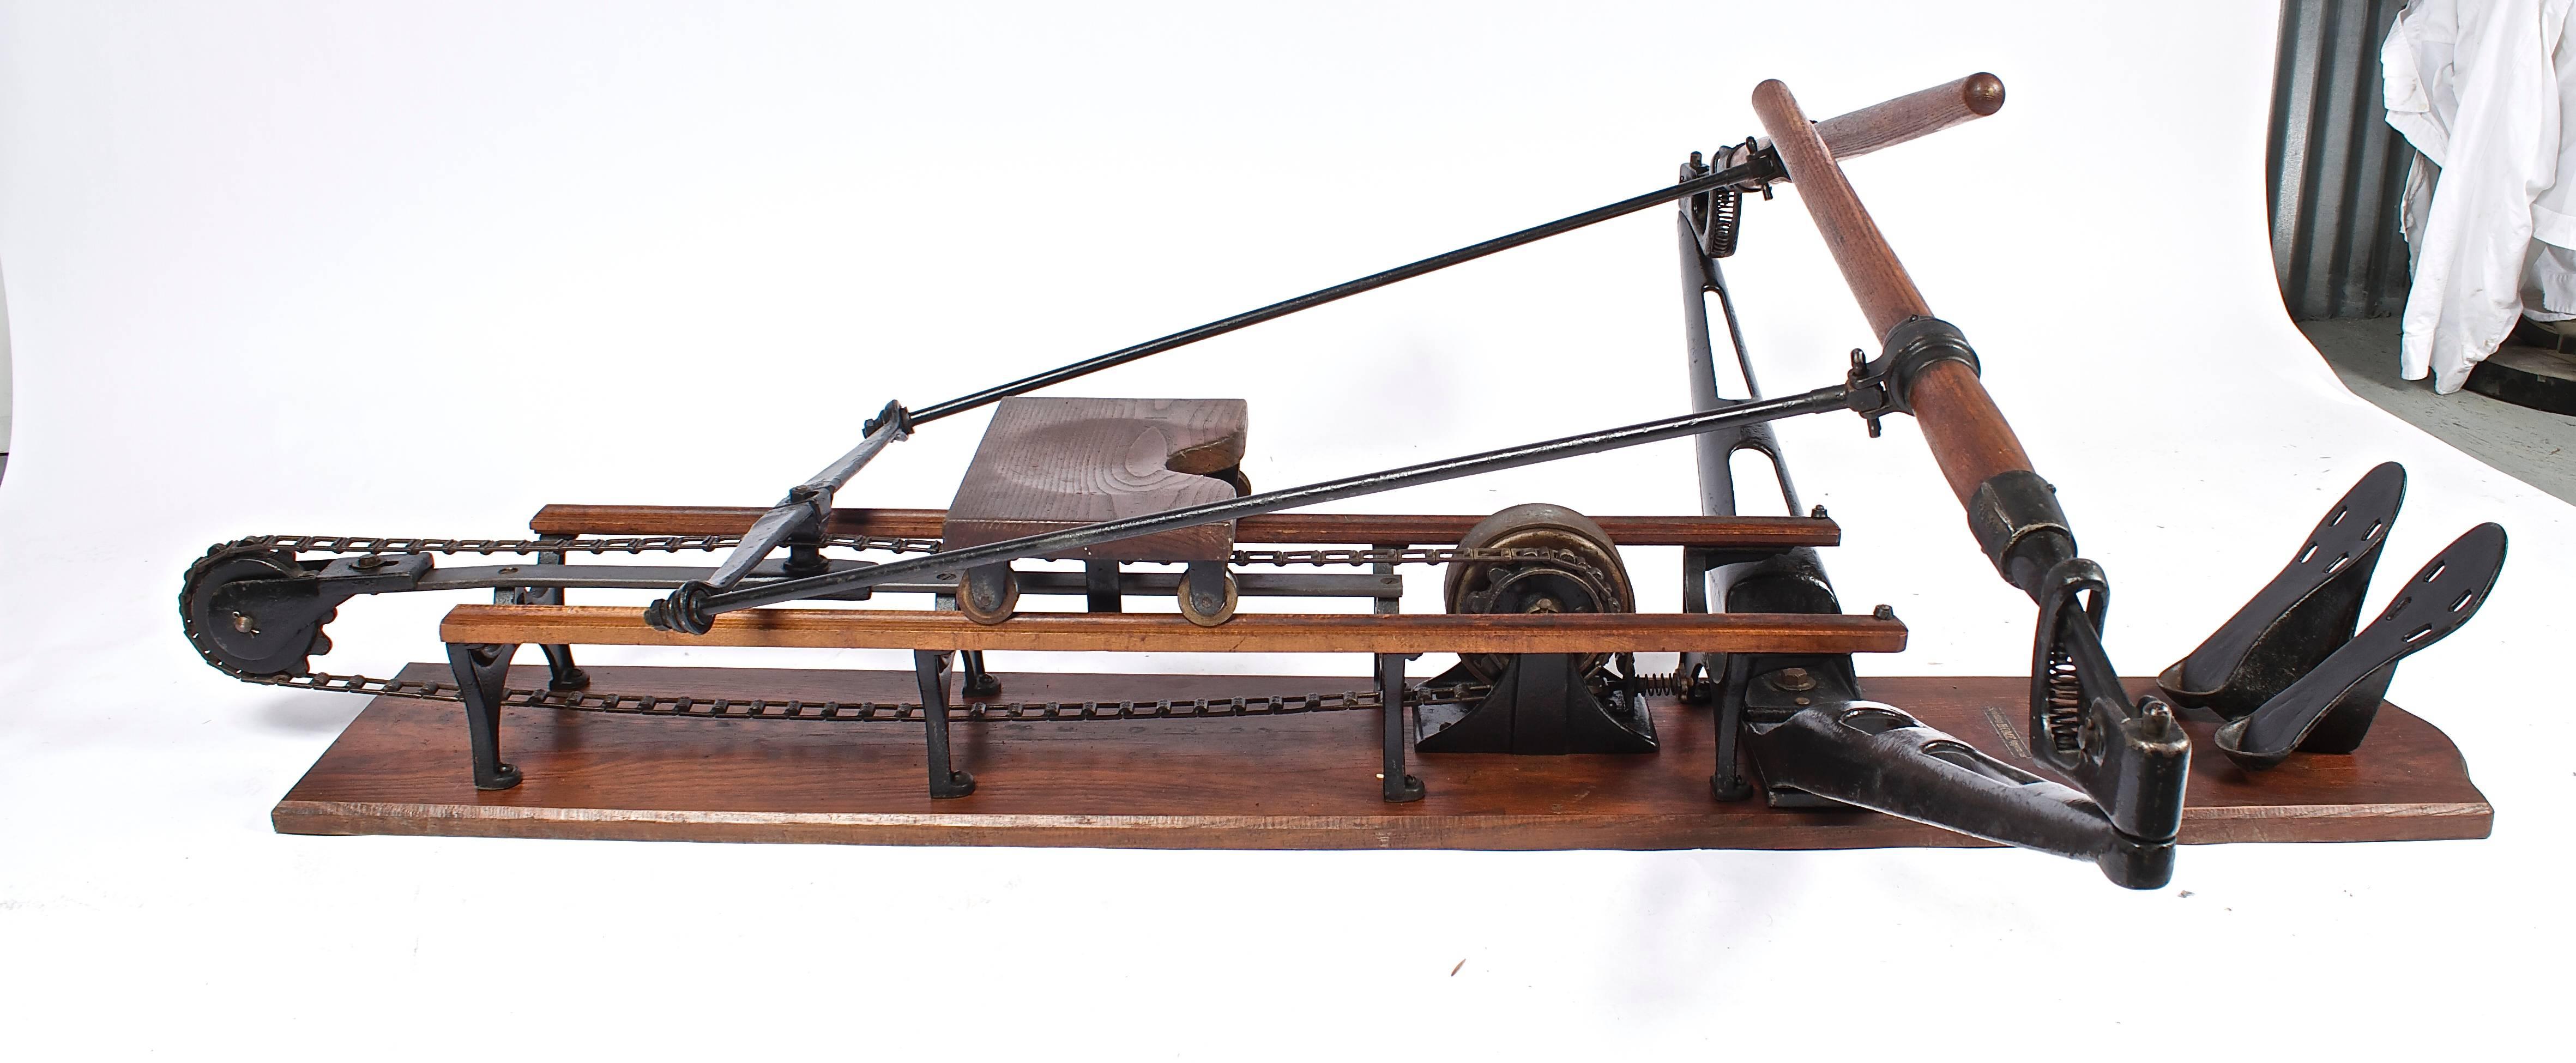 Industrial 1920 Spalding Rowing Machine, Sporting Equipment